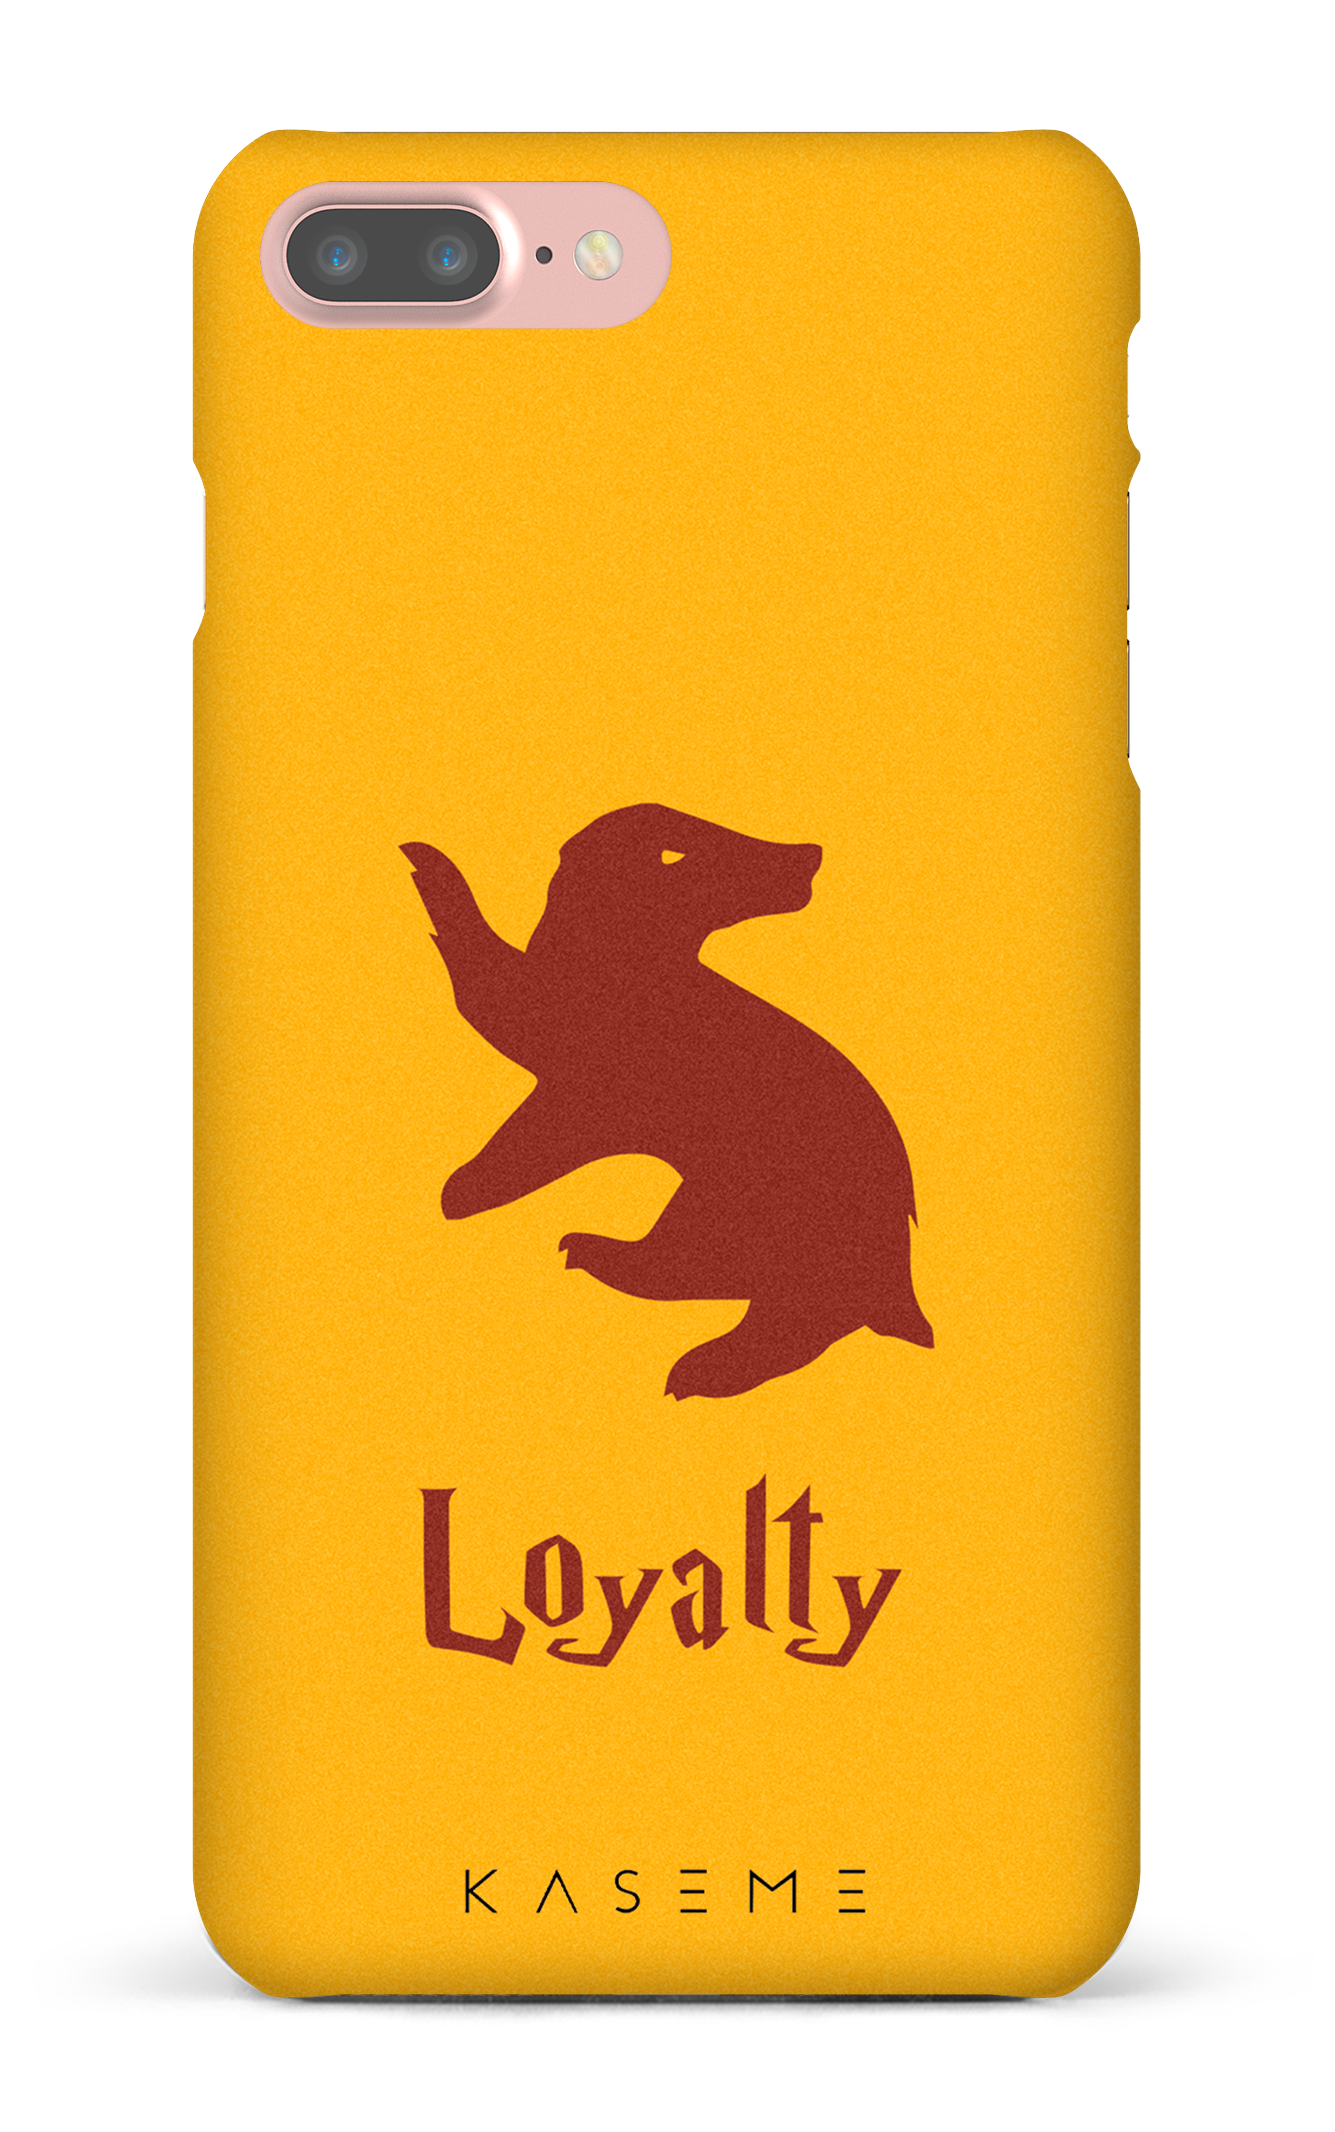 Loyalty - iPhone 7 Plus